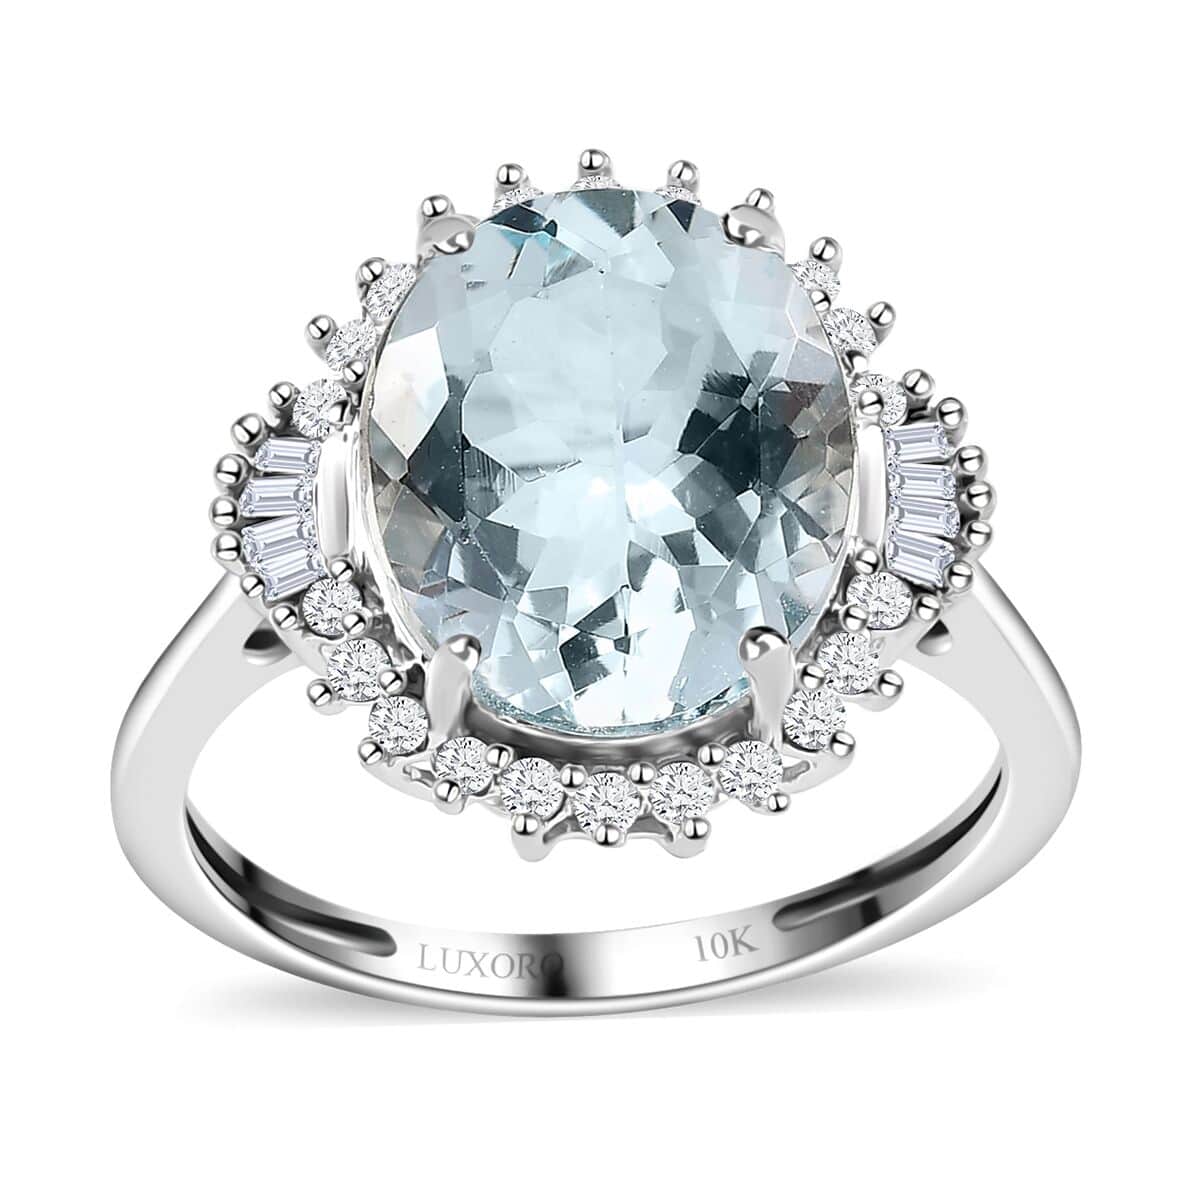 Luxoro 10K White Gold Premium Mangoro Aquamarine, Diamond (0.30 cts) Halo Ring (Size 10.0) 4.40 ctw image number 0